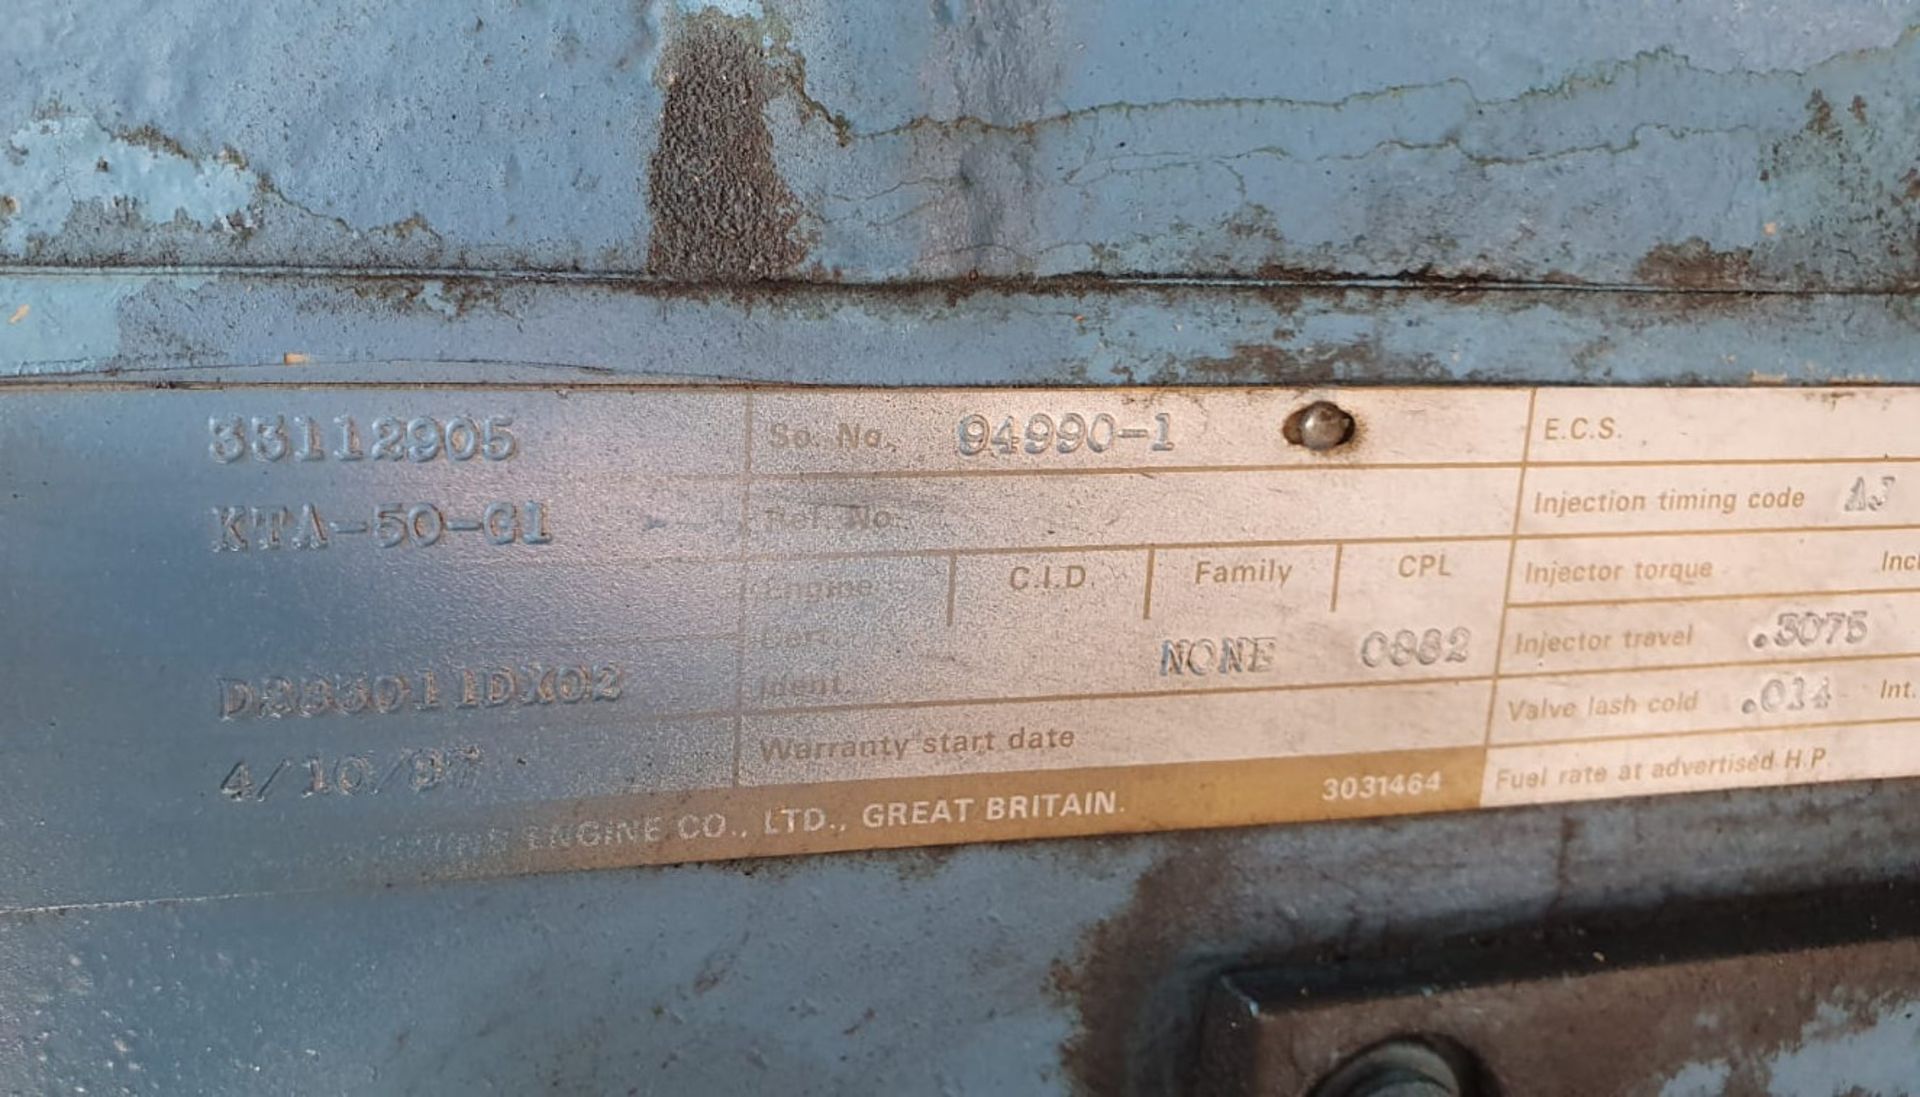 1 x 1987 Hitzinger SGS 9D 040 Generator - Only 800 Hours Use - Ref: T4UB/HZ - CL333 - Location: - Bild 2 aus 20